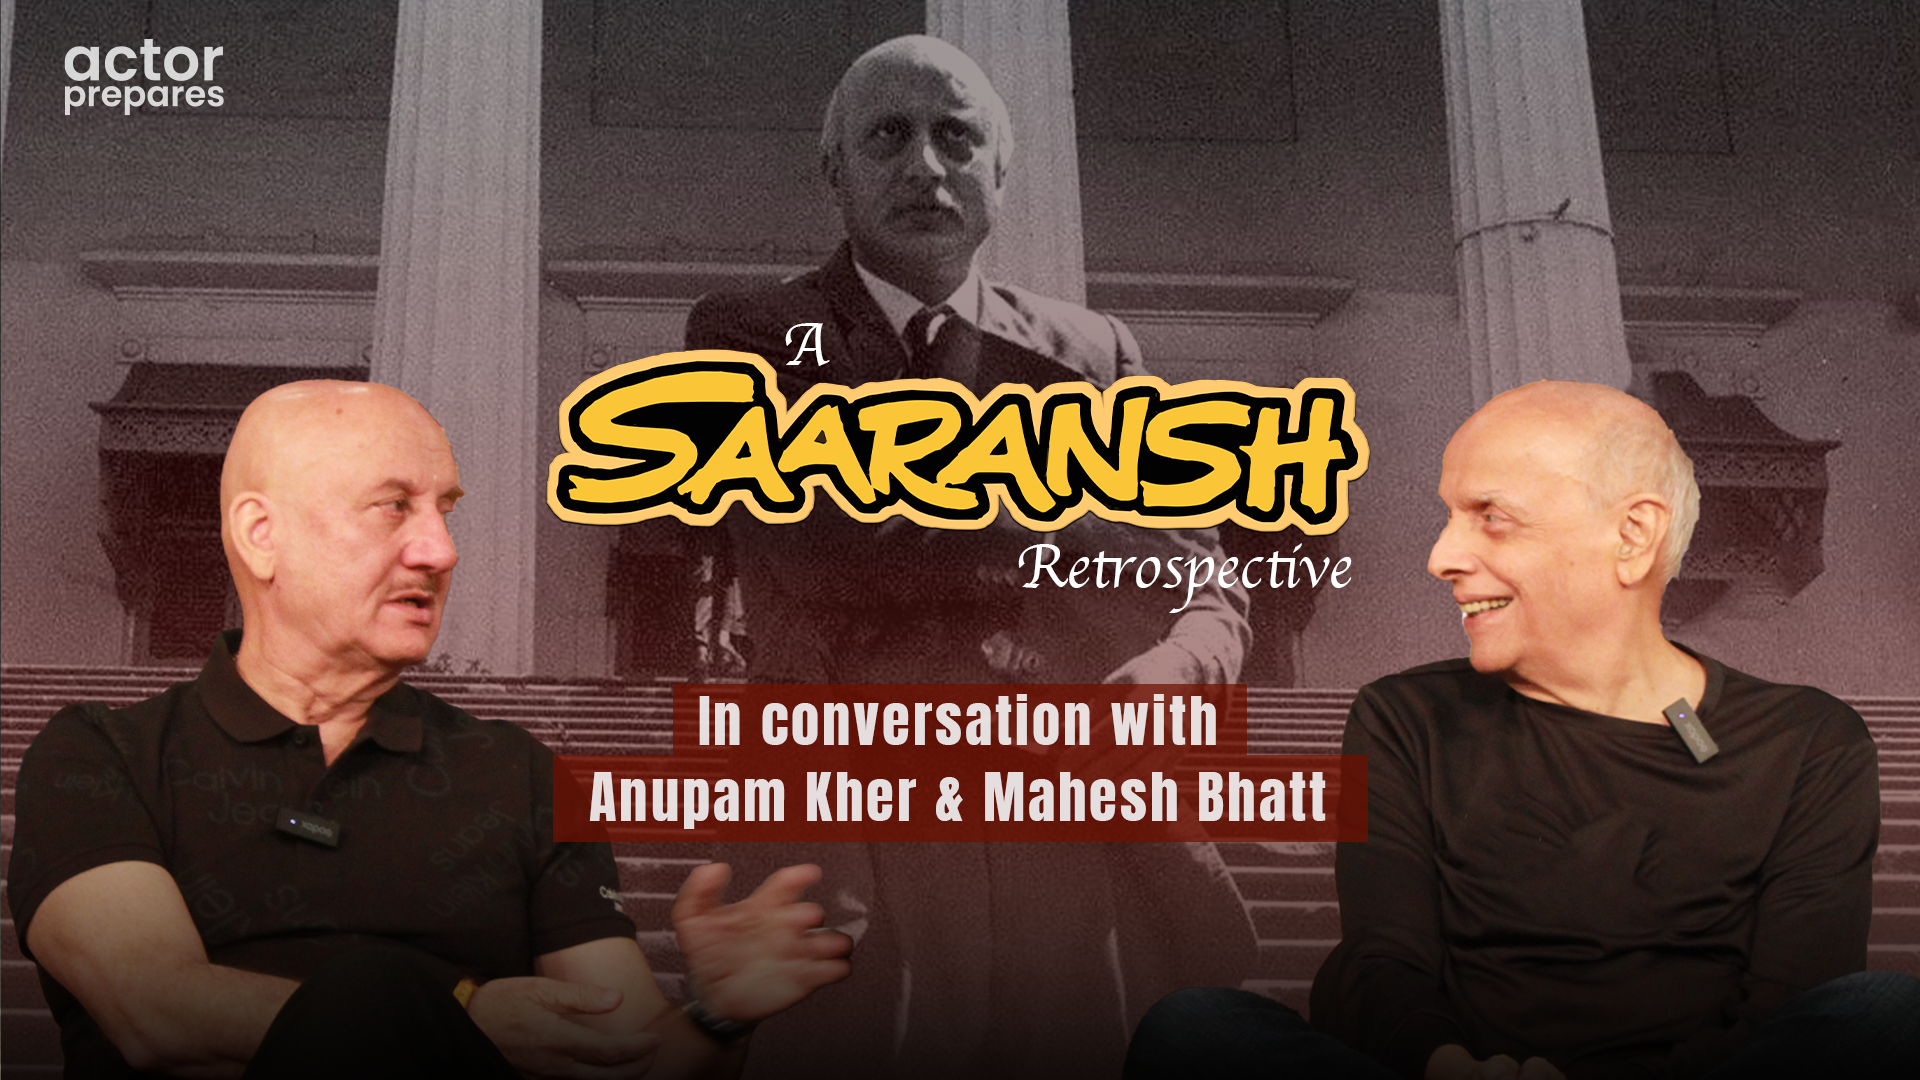 Mahesh Bhatt looks back on the Saaransh journey at Actor Prepares: A Saaransh Retrospective. 